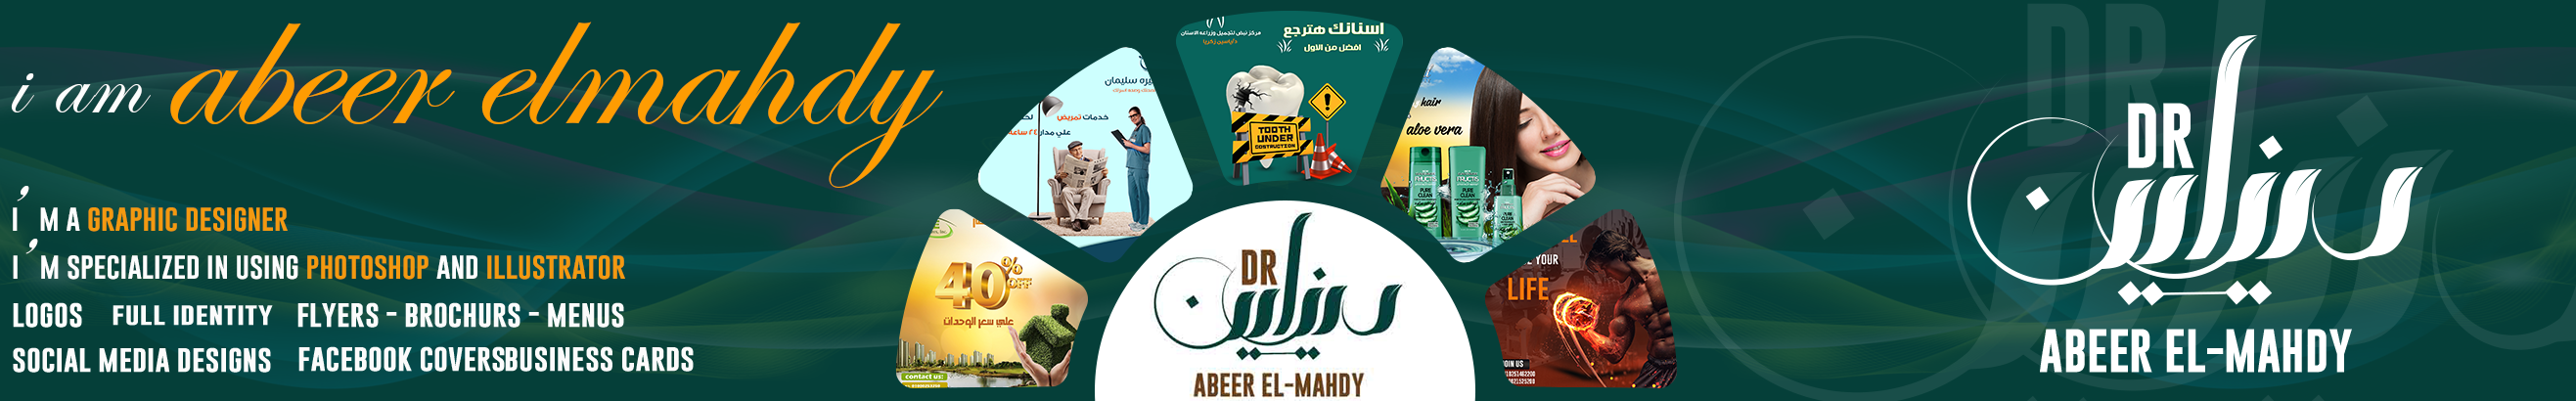 Abeer Elmahdy's profile banner